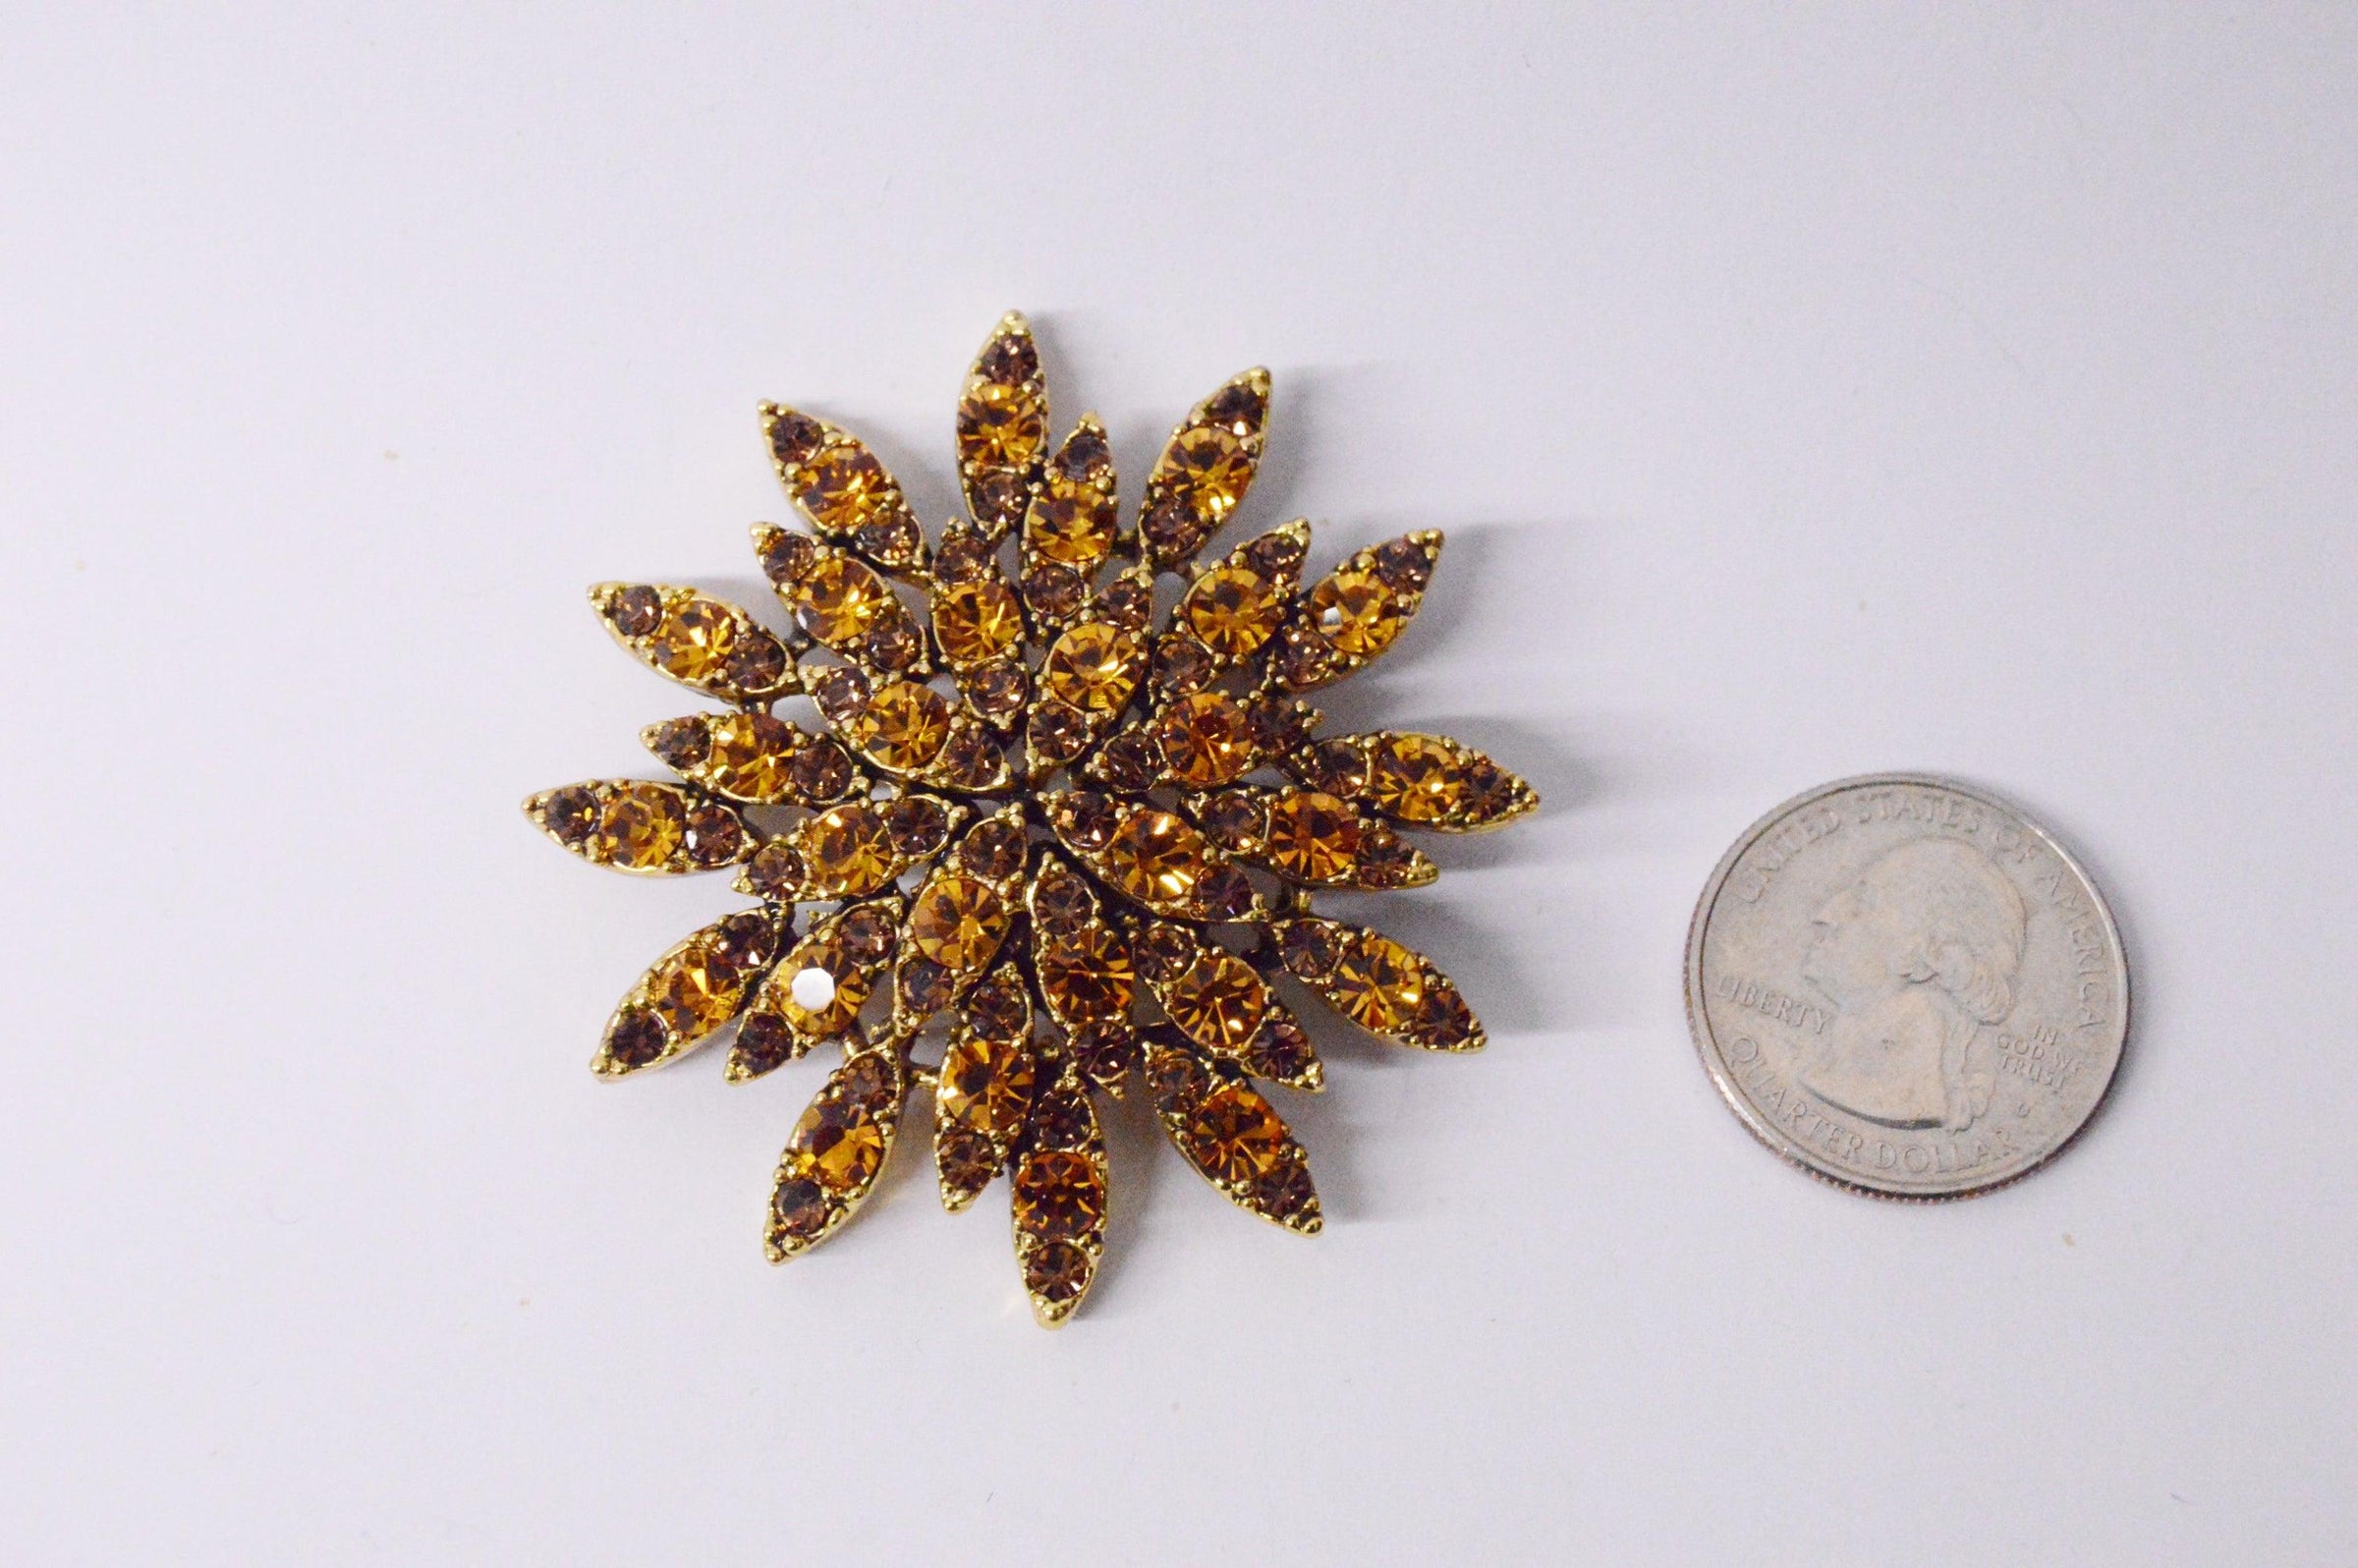 Orange And Brown Rhinestone Star Flower Brooch Pin - Hers and His Treasures